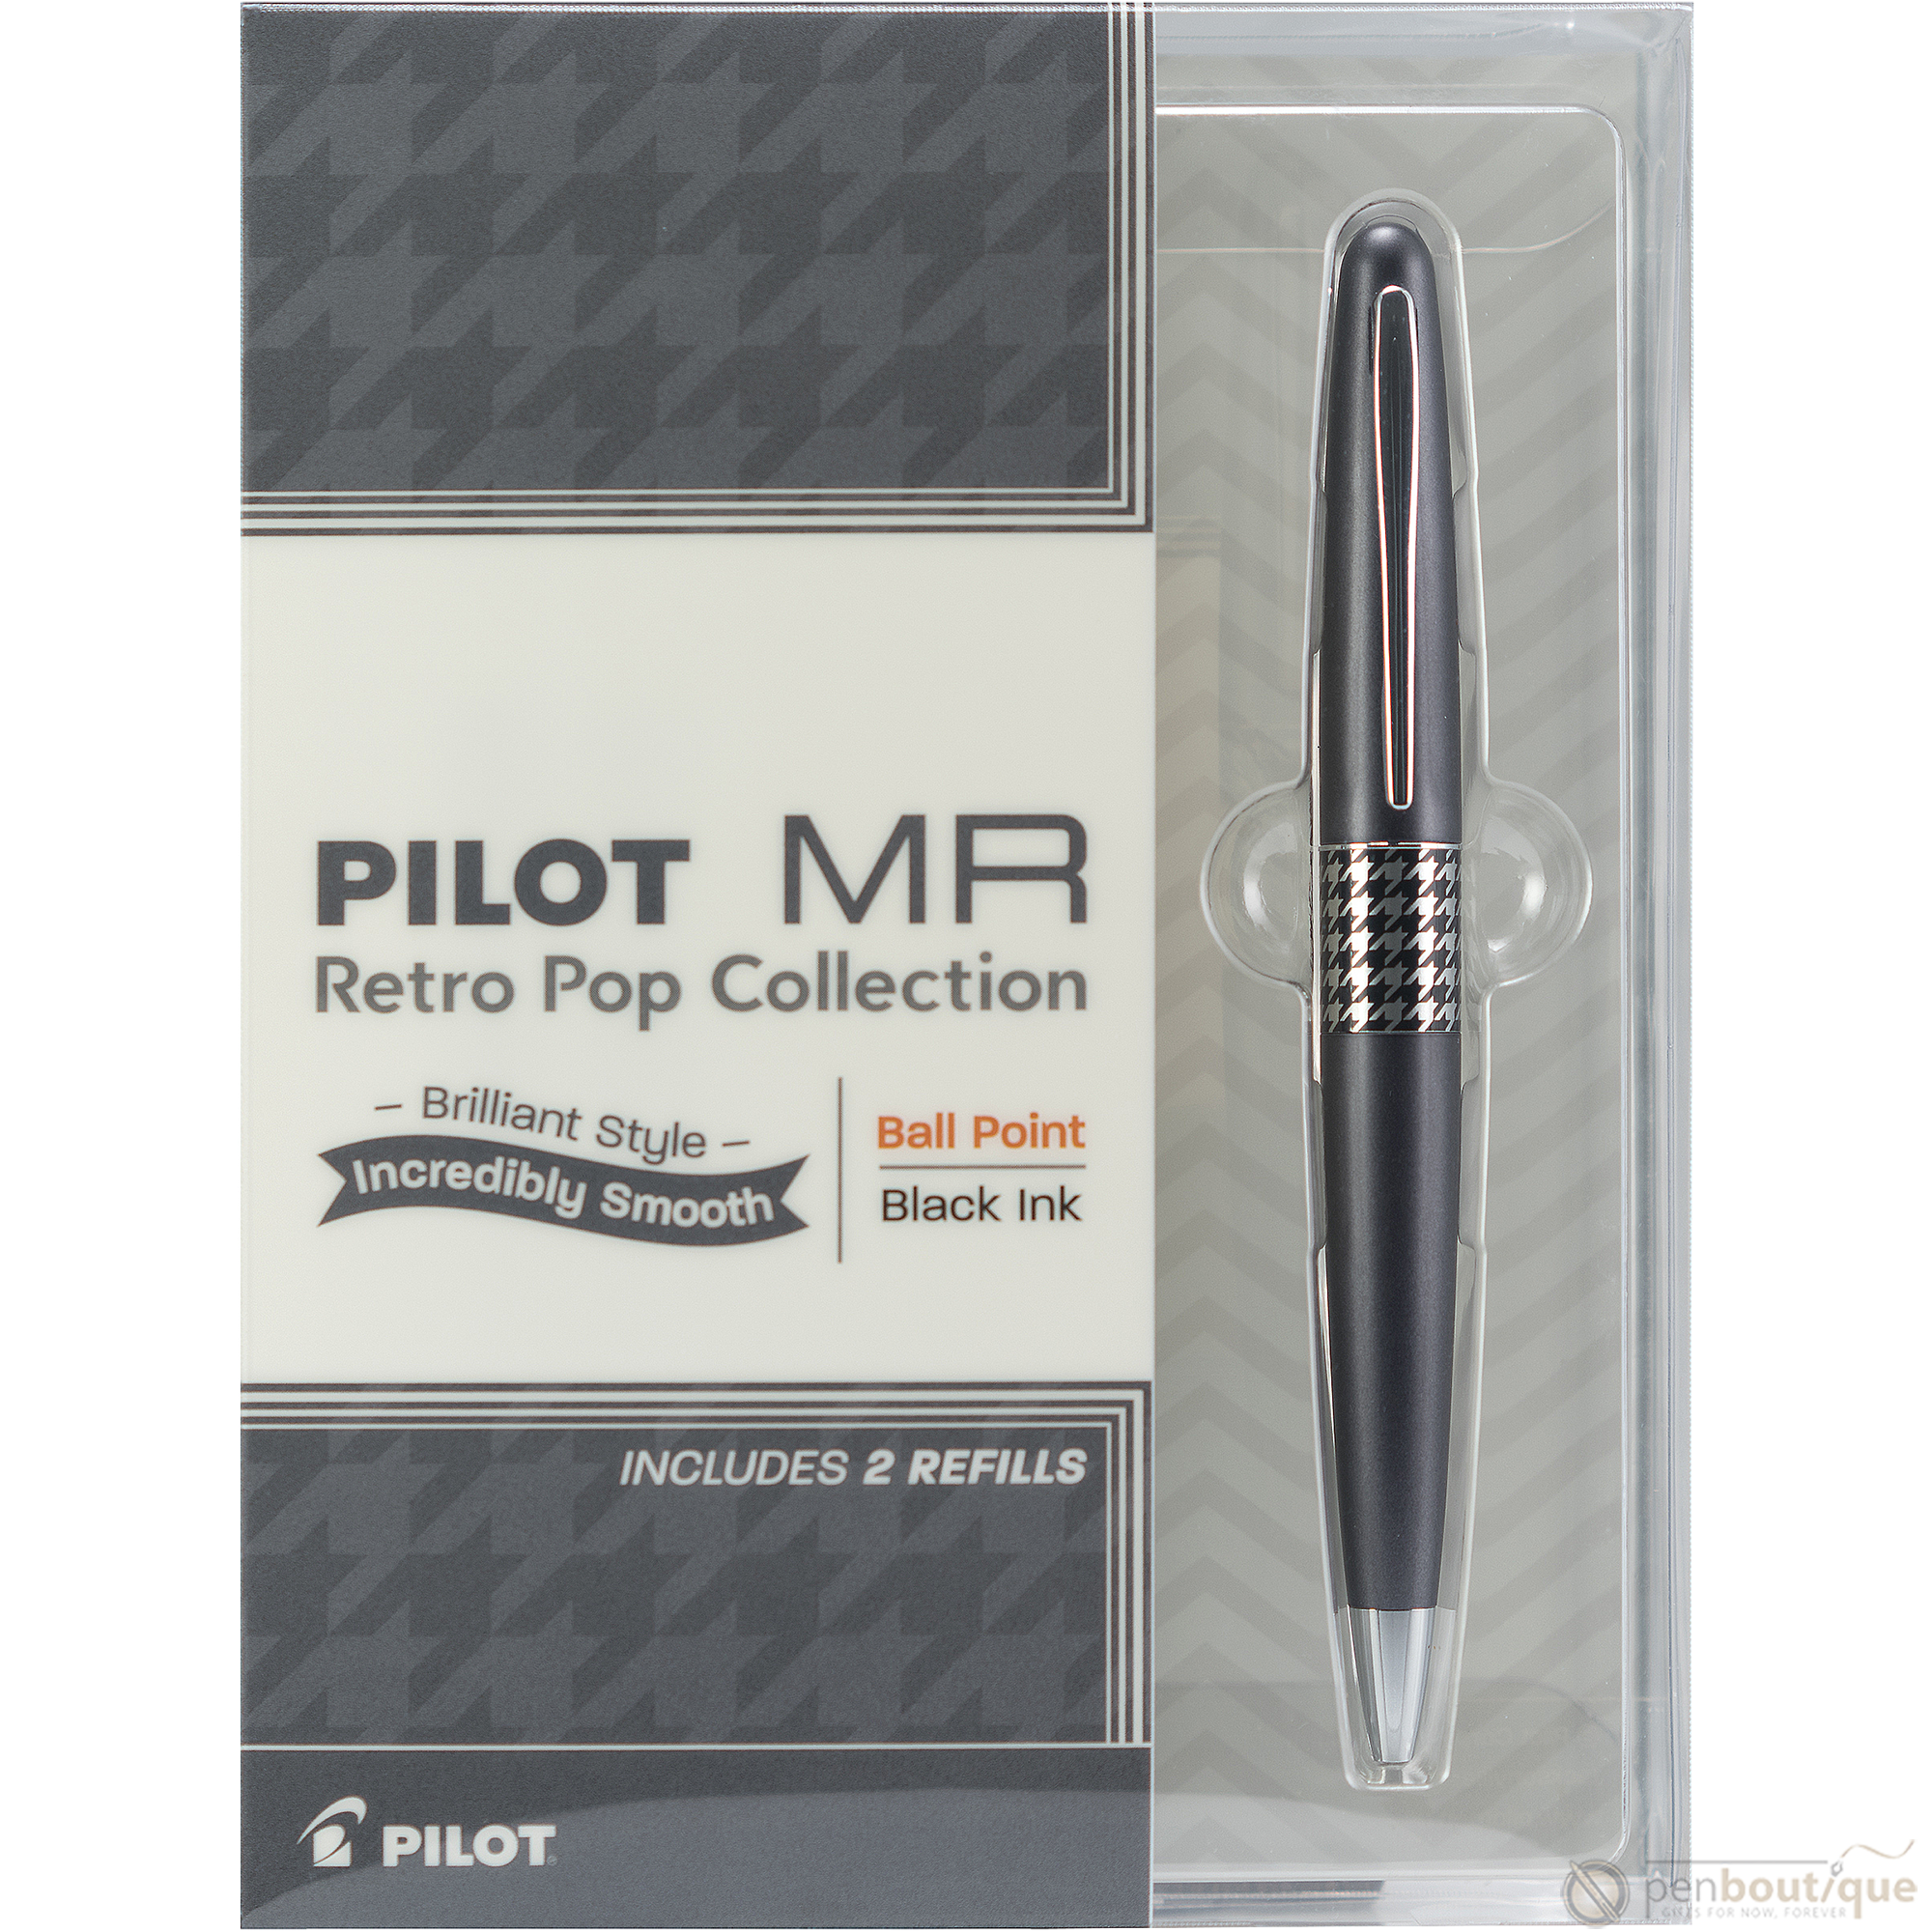 Pilot MR Retro Pop Ballpoint Pen Metallic Gray